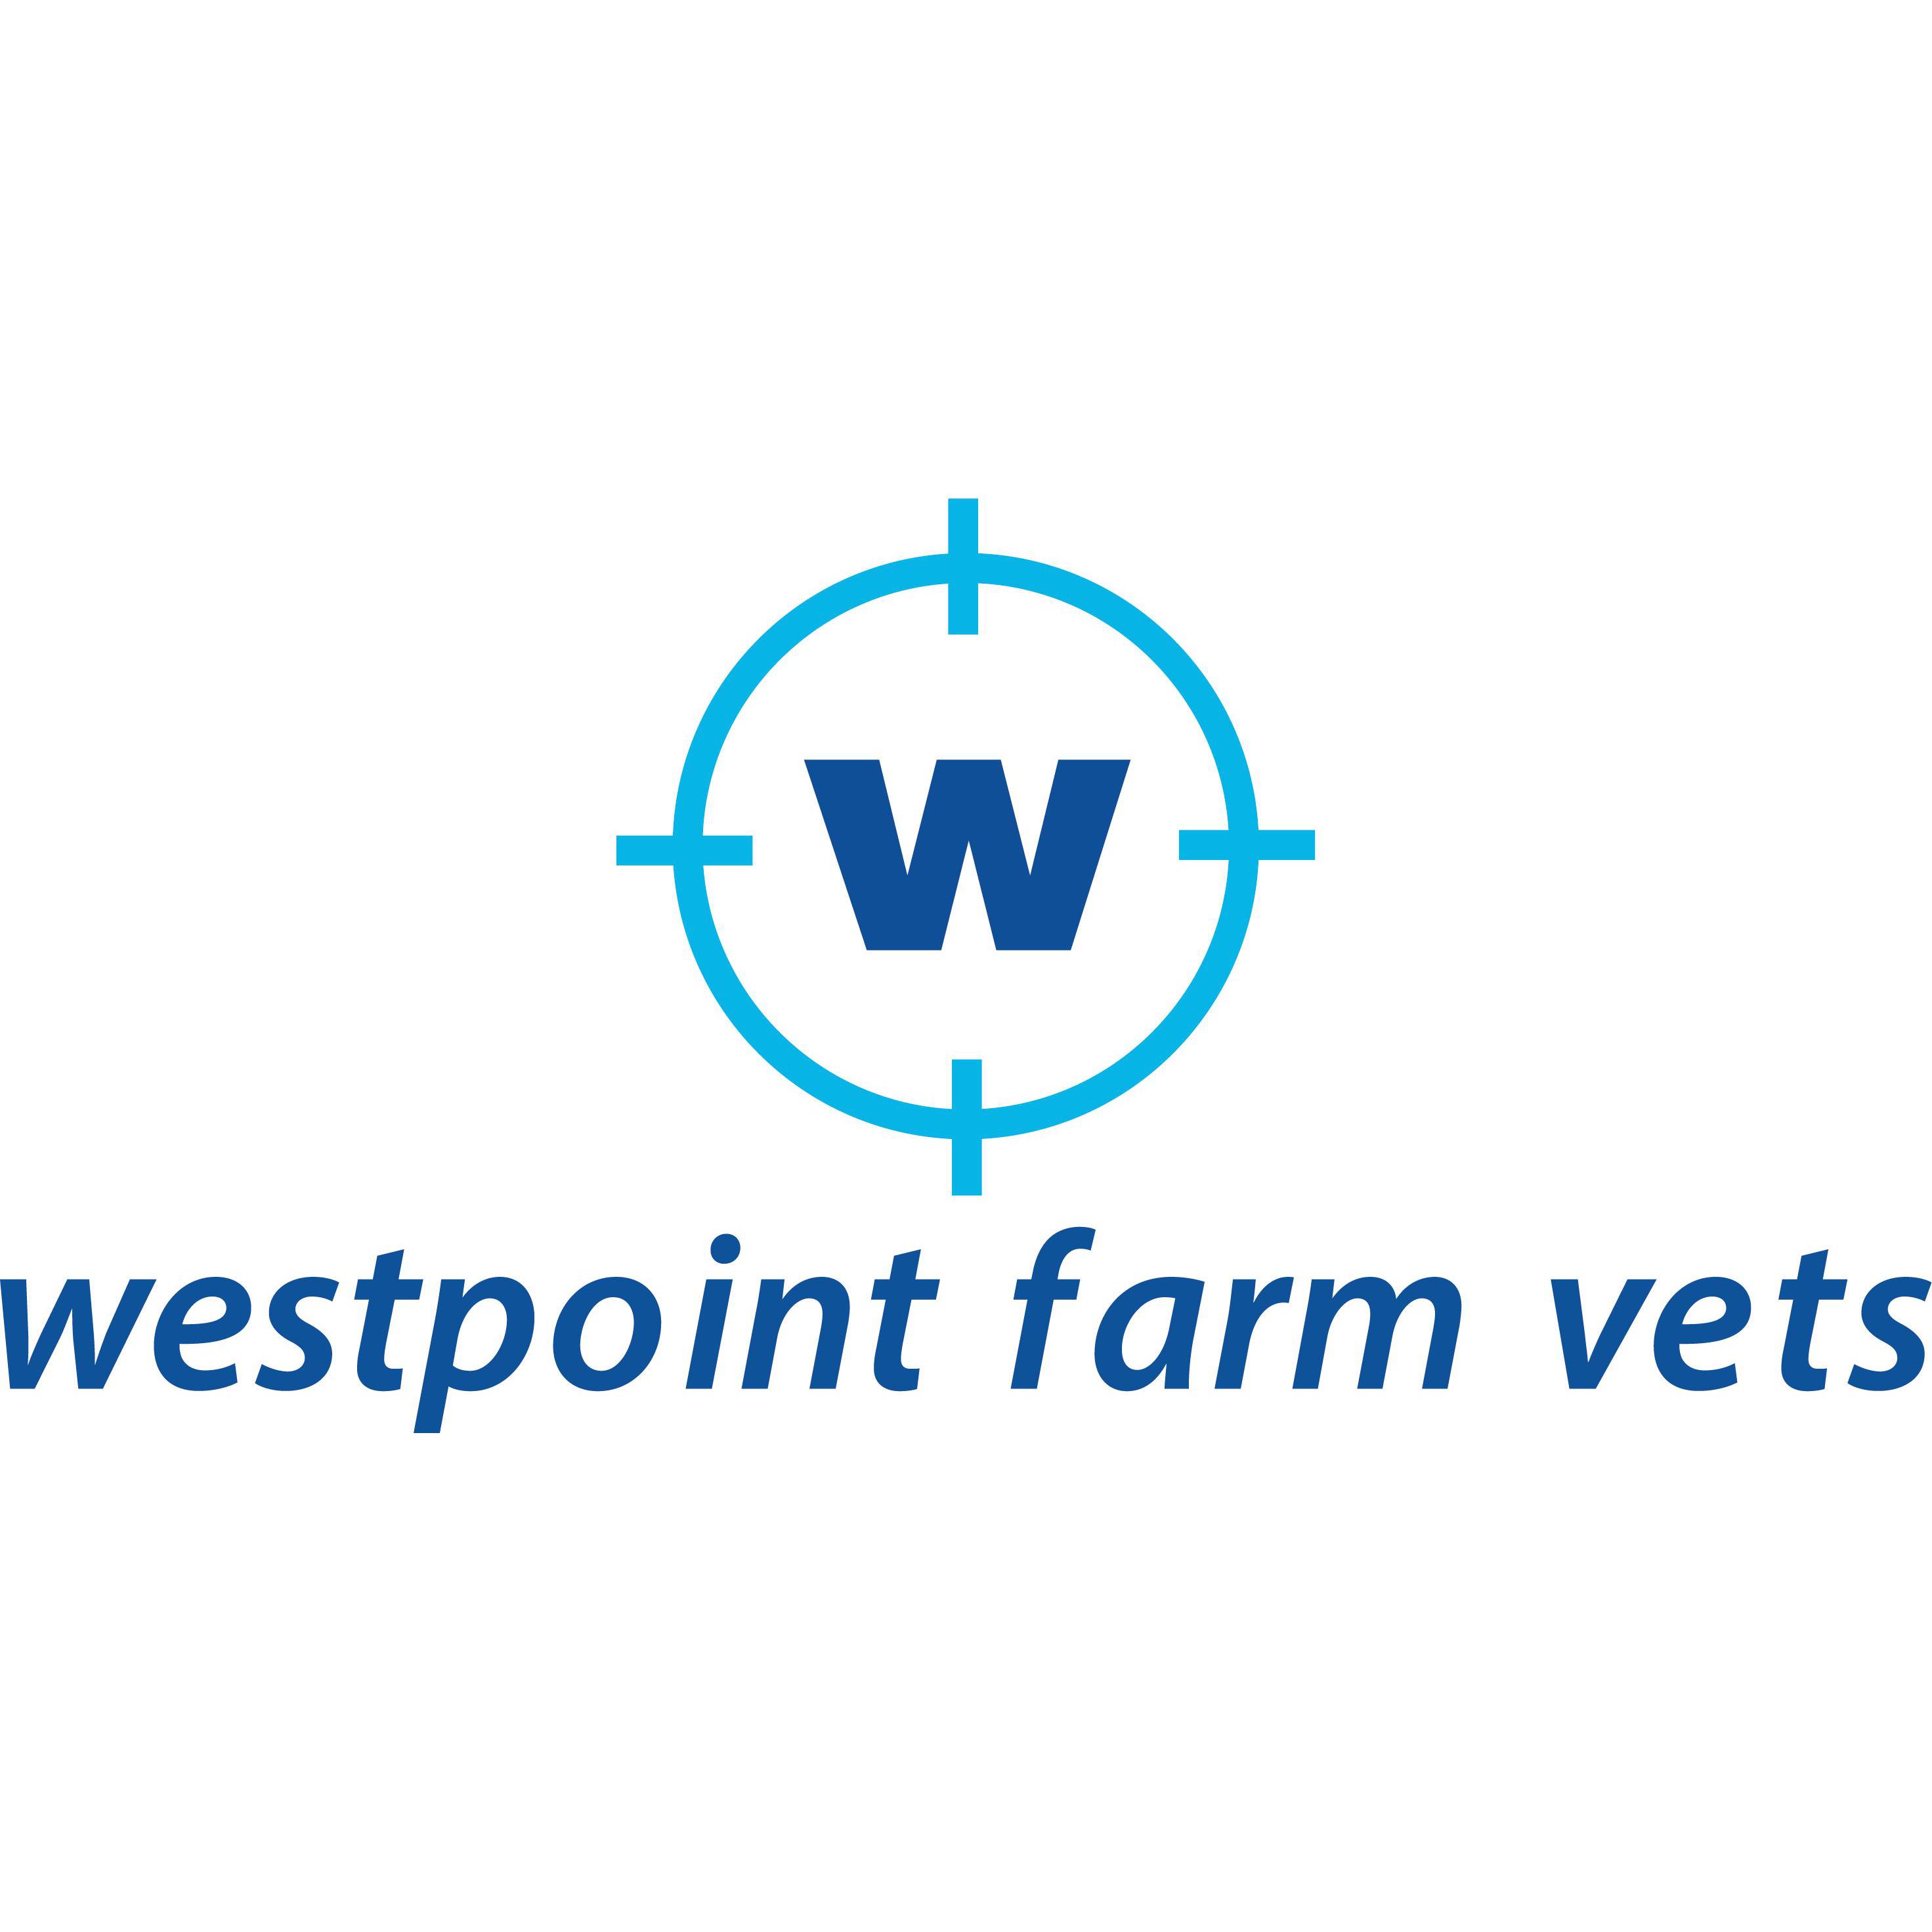 Westpoint Farm Vets, Sevenoaks - Westerham, Kent TN16 1LL - 01959 564383 | ShowMeLocal.com